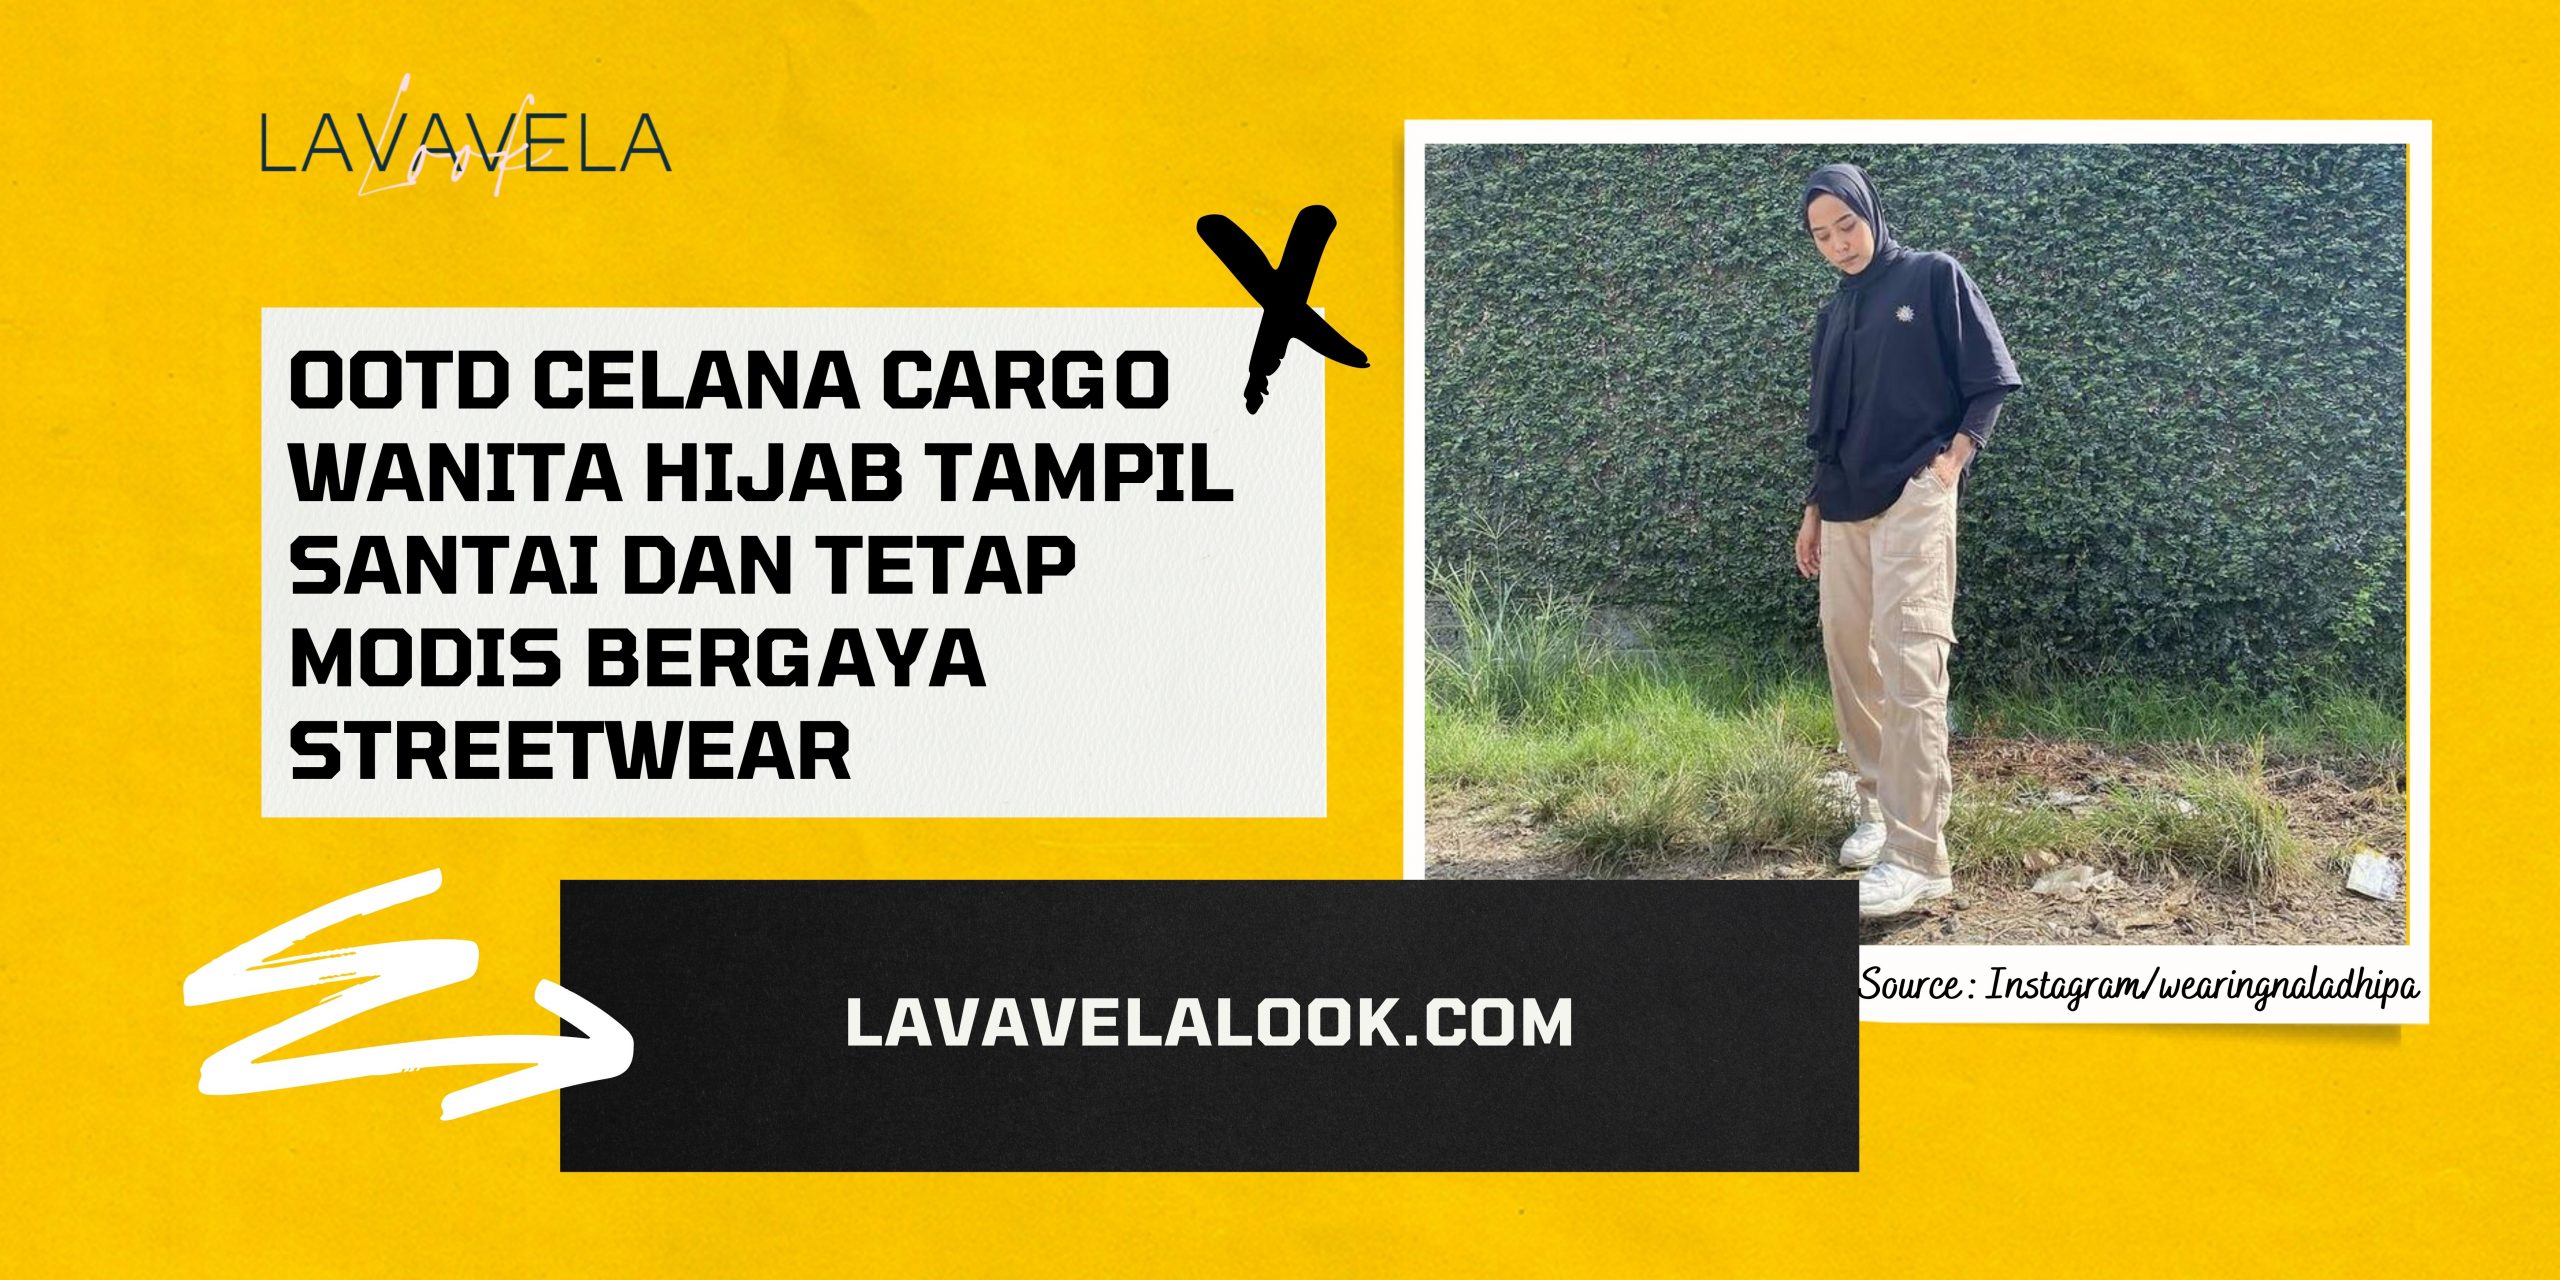 OOTD Celana Cargo Wanita Hijab